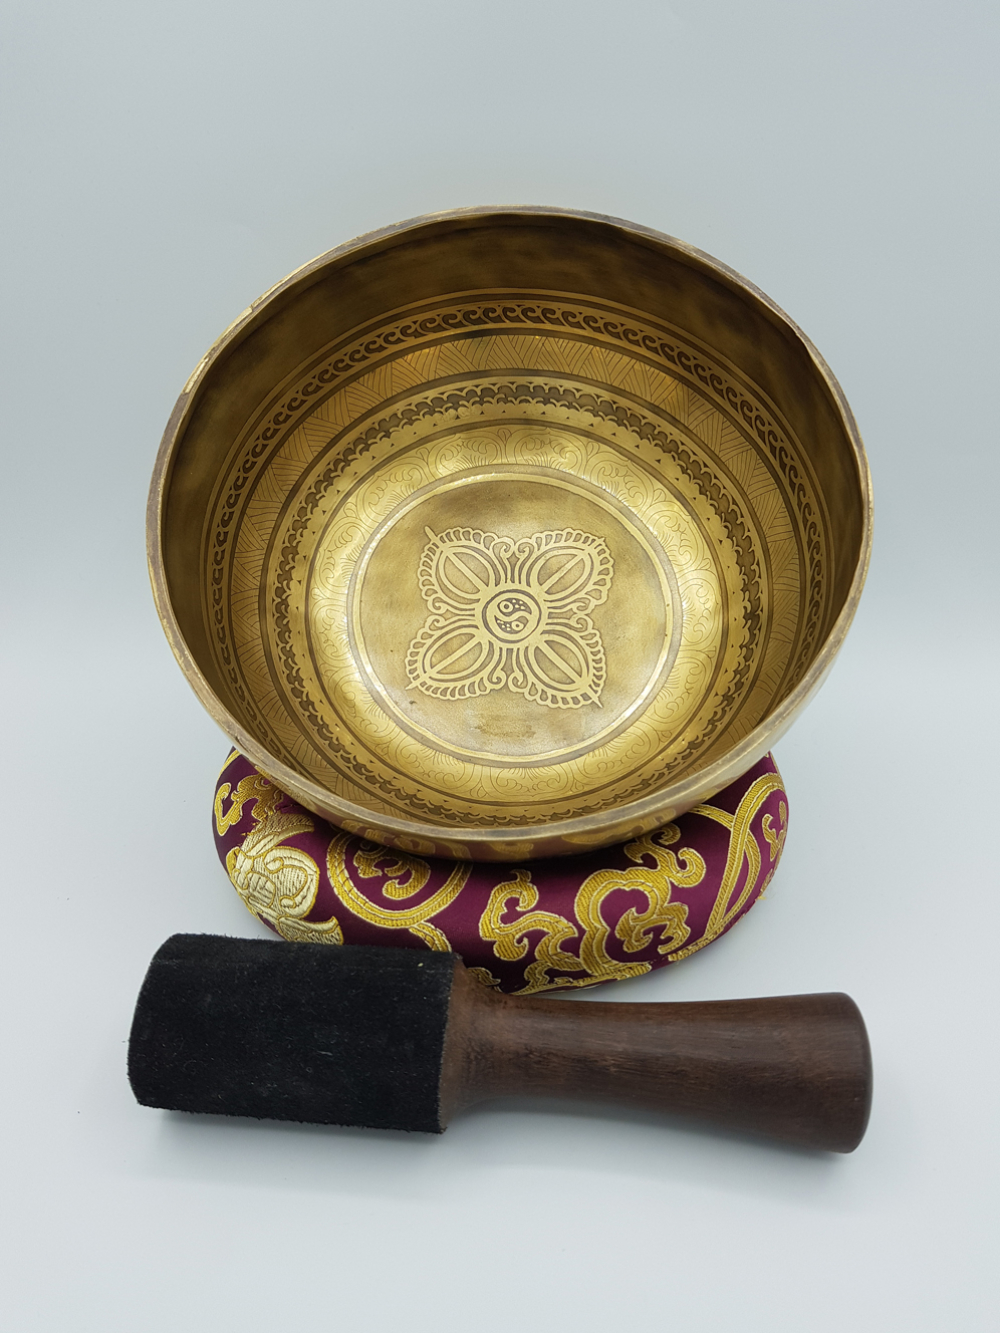 Tibetische Klangschale mit Gravuren 1,3kg 21,5cm Durchmesser